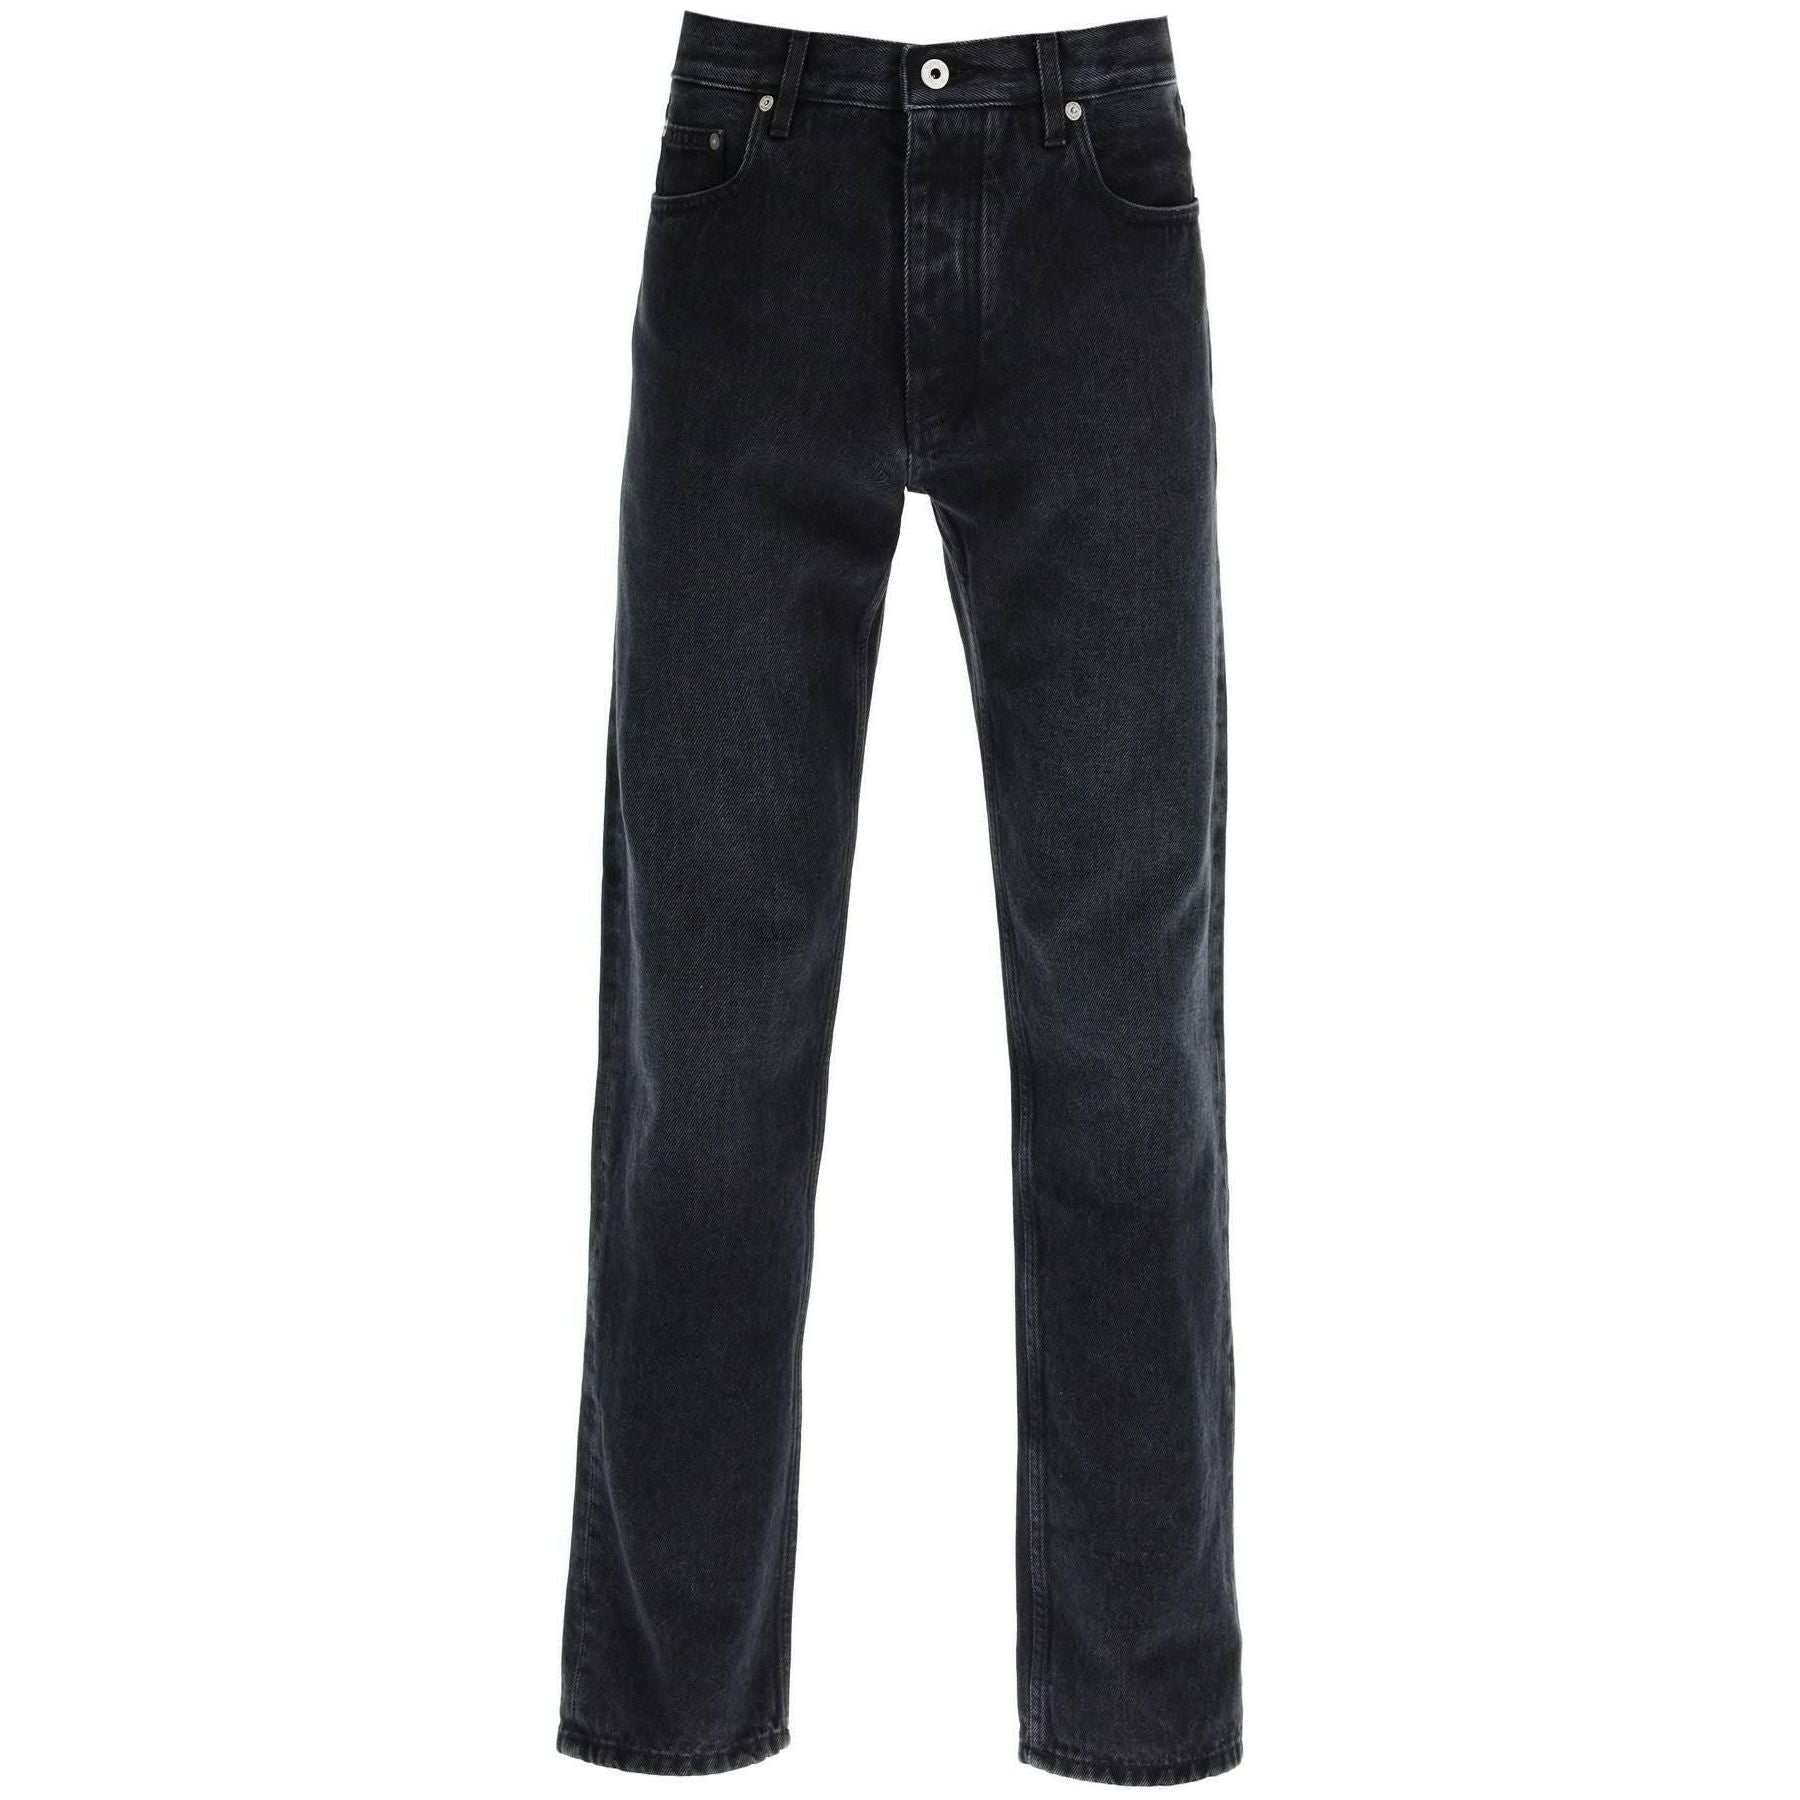 Washed Black Regular-Fit Cotton Jeans OFF-WHITE JOHN JULIA.